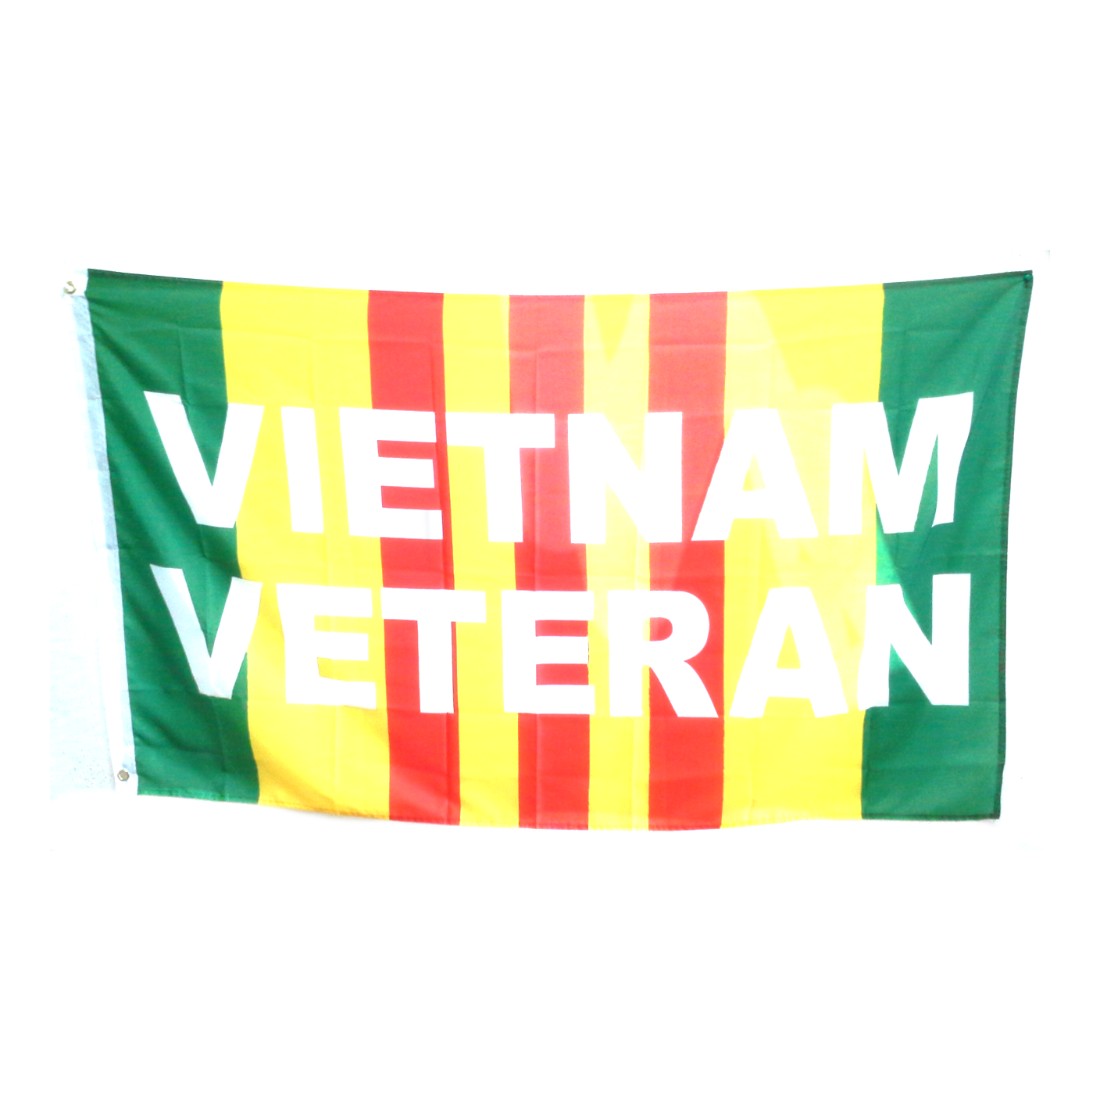 Vietnam Veteran Ribbon Flag 3' x 5'